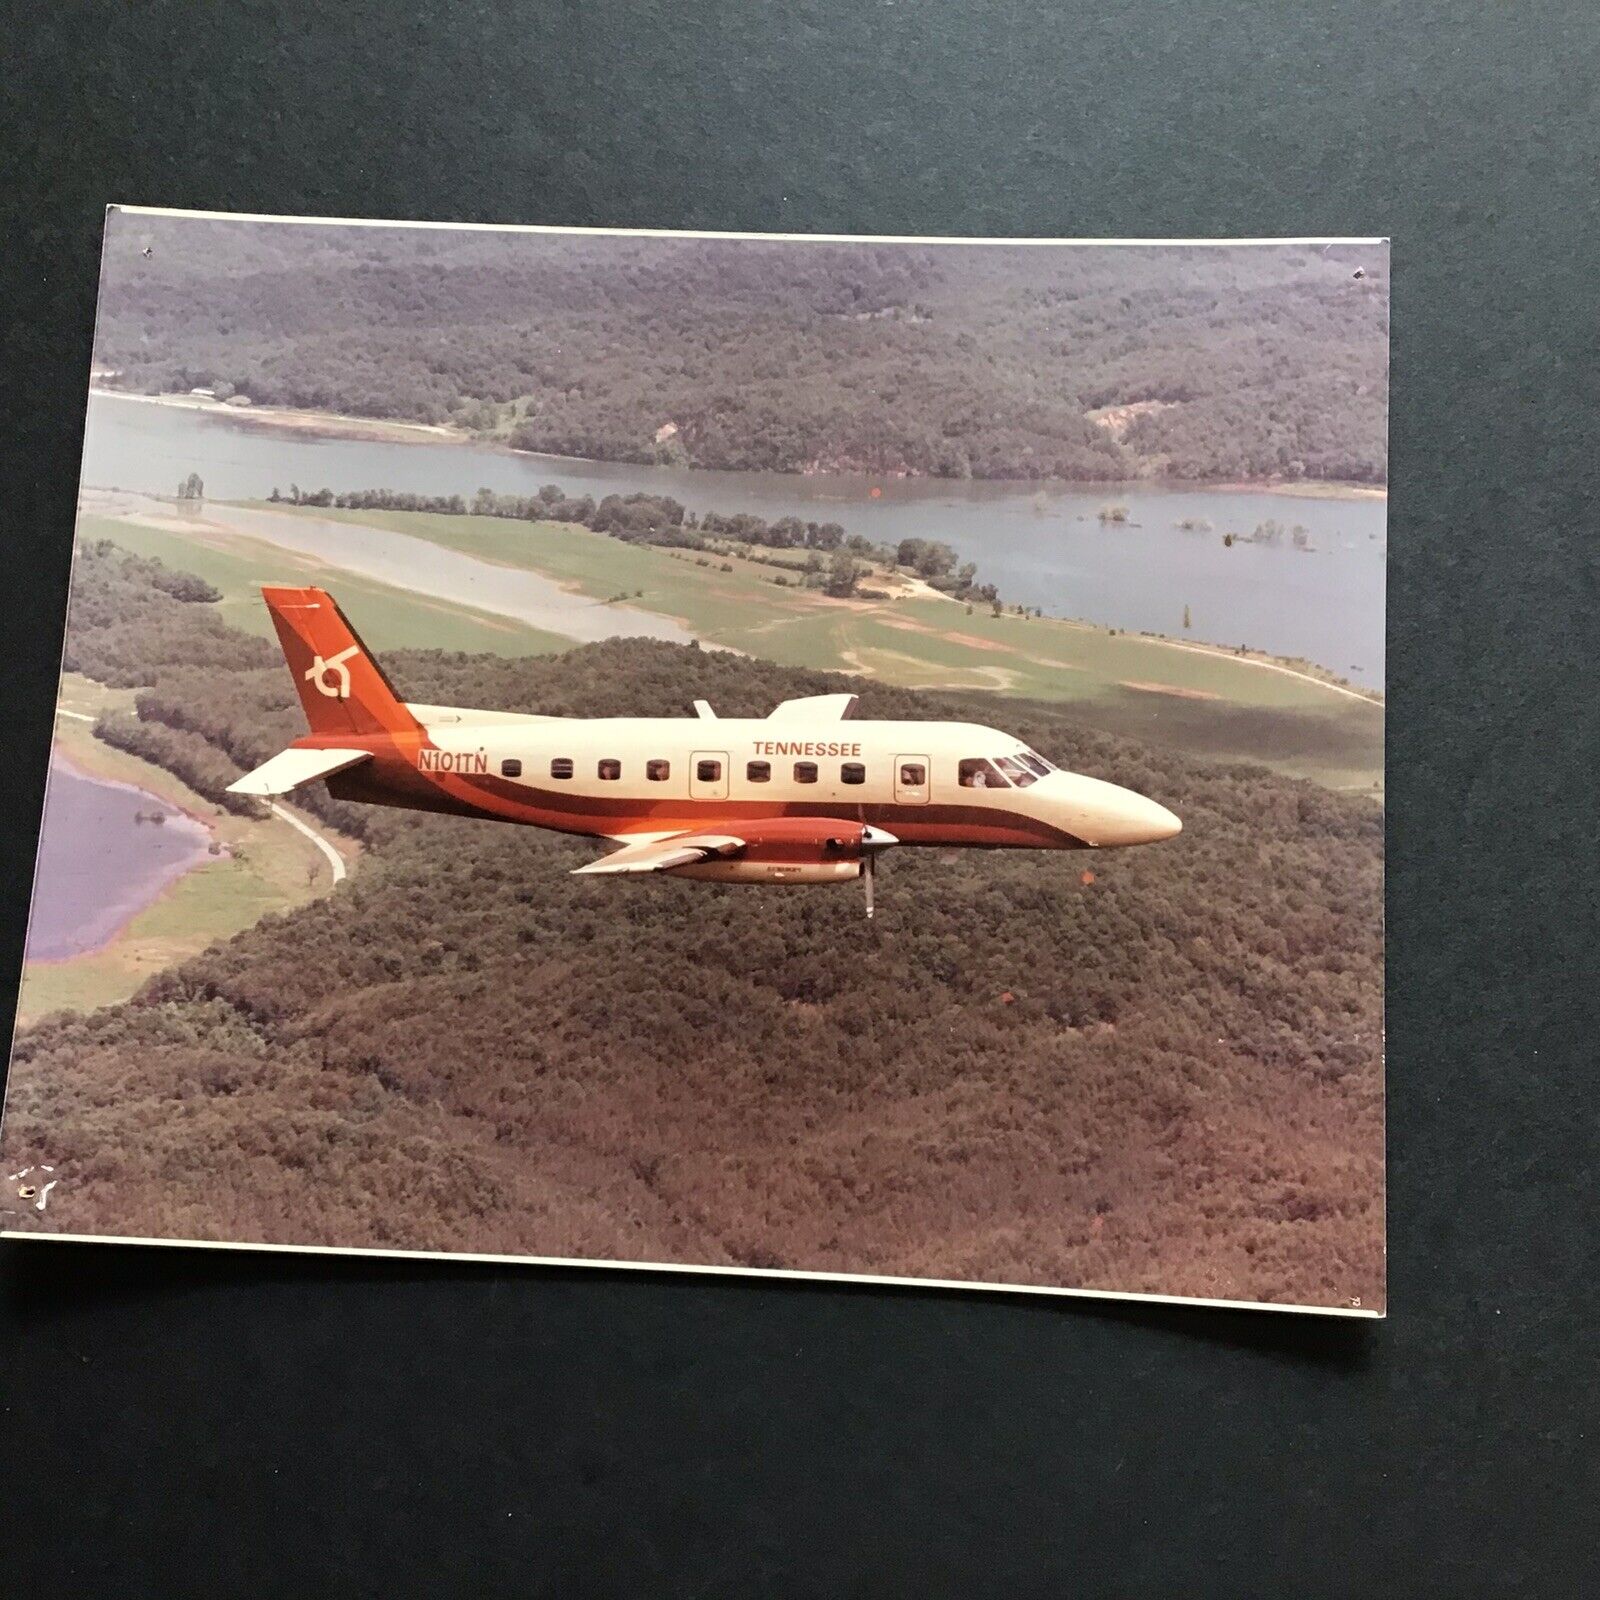 Tennessee Airways - Embraer EMB-110 Press Photo - Vintage Regional Airline Photo